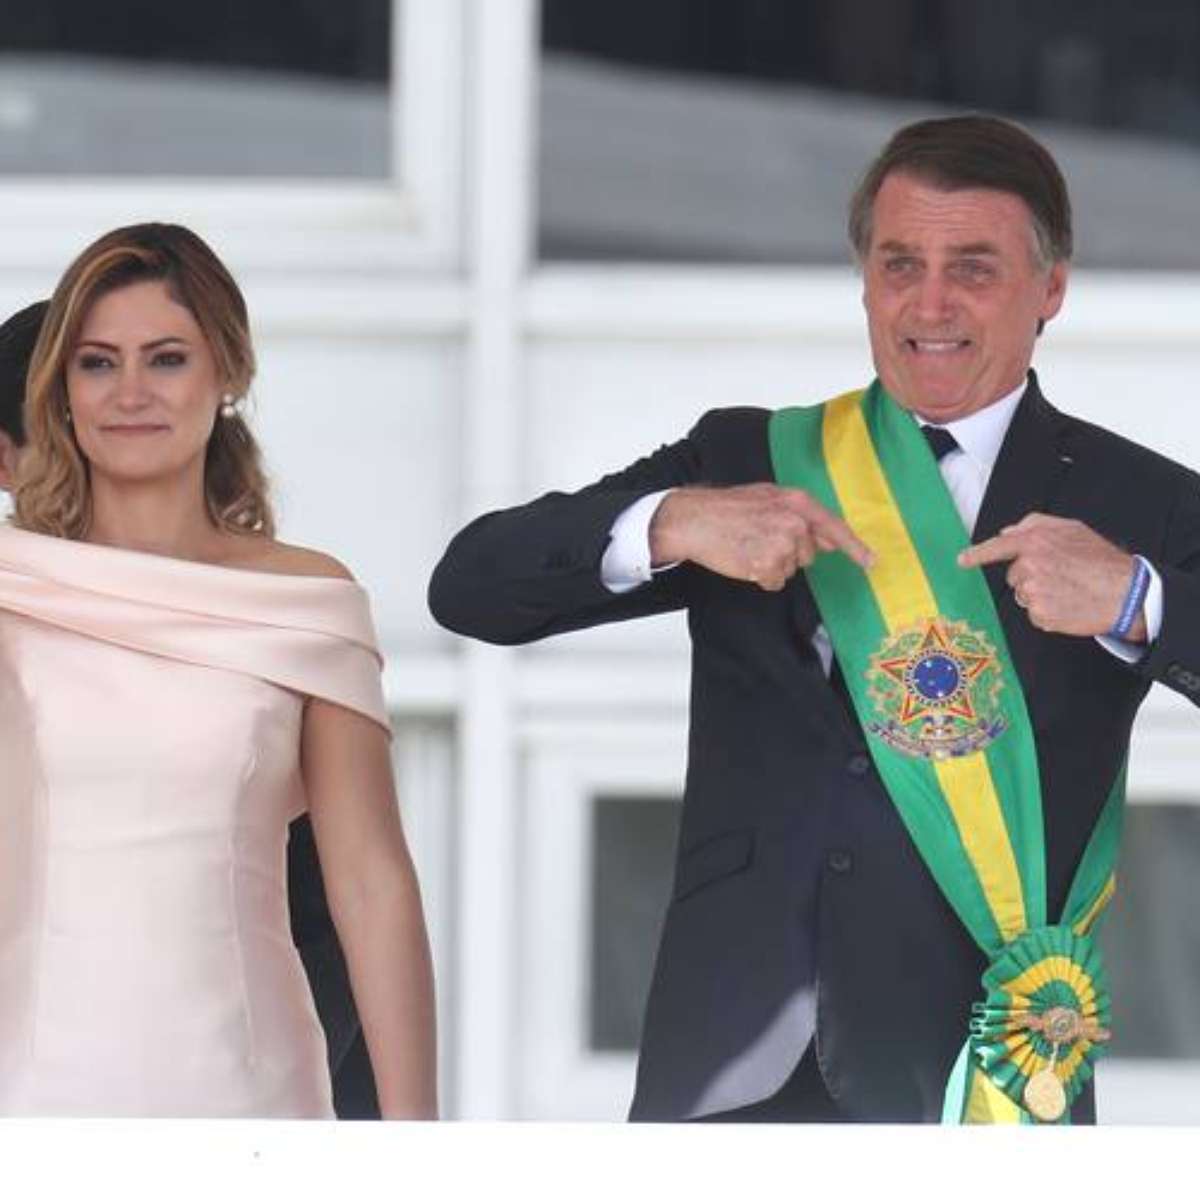 A enteada de Bolsonaro que, aos 20 anos, terá salário de 13 mil